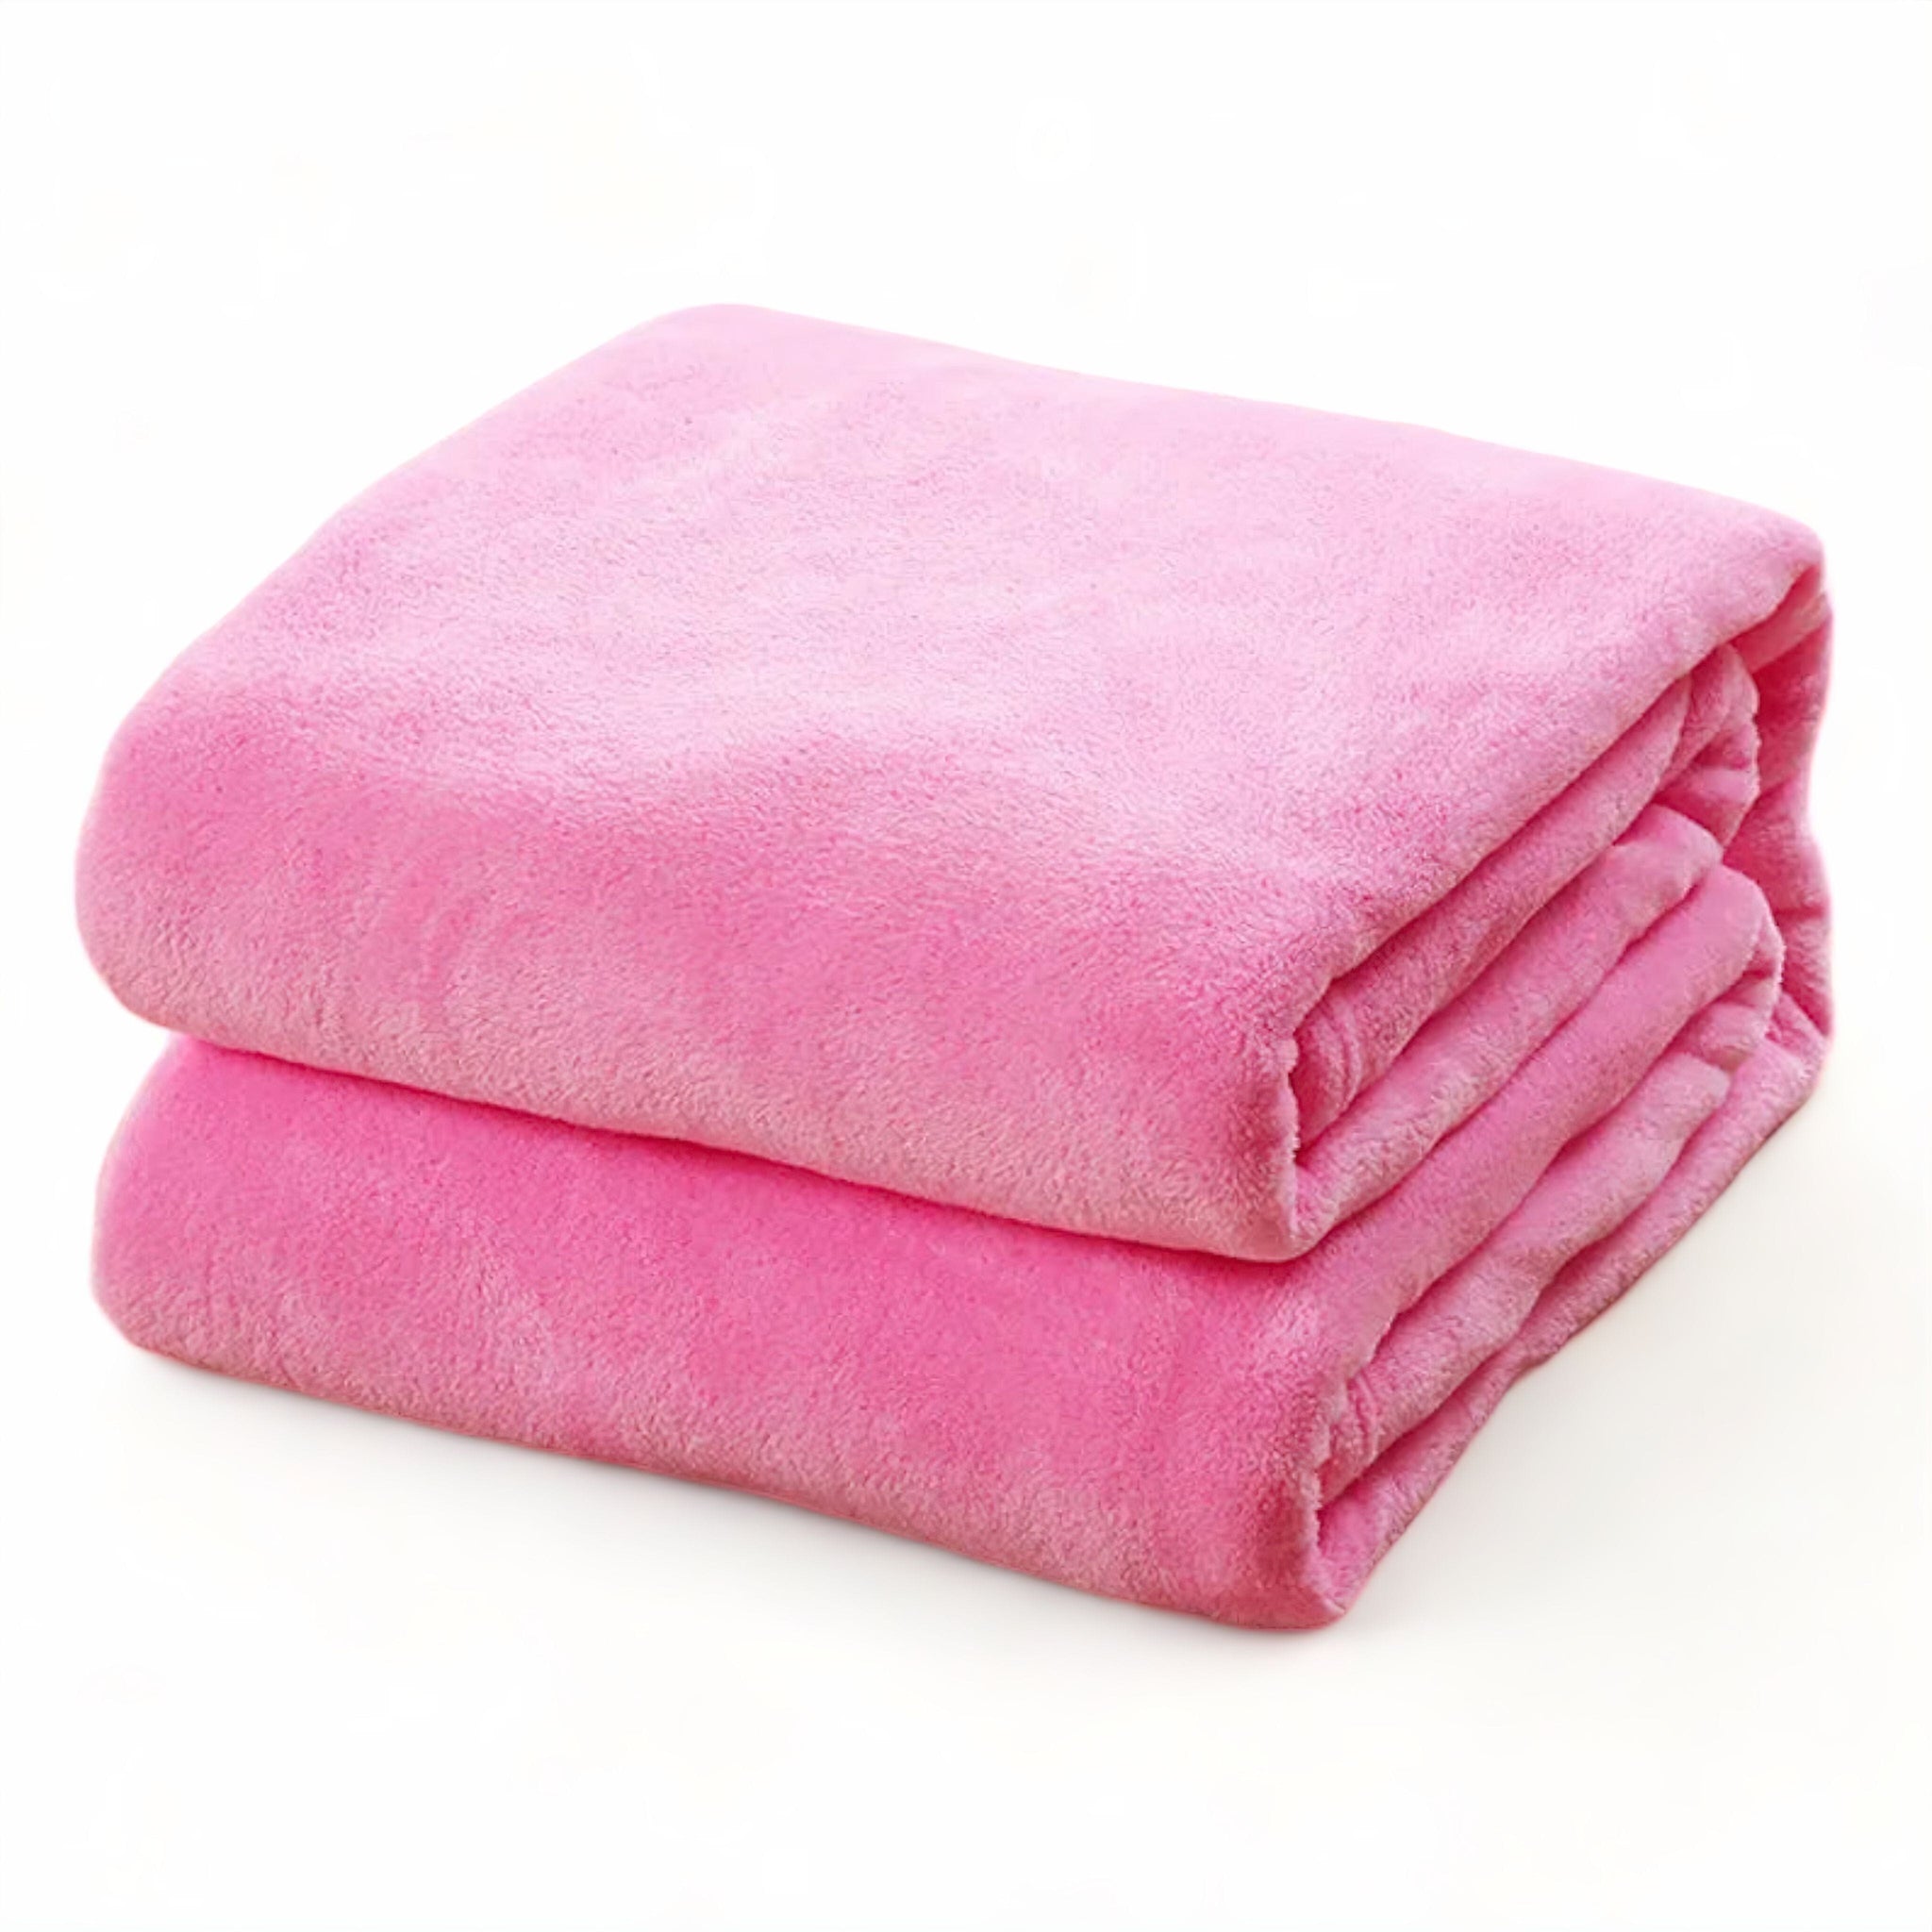 Domenica Blanket Pink 100 x 150cm 